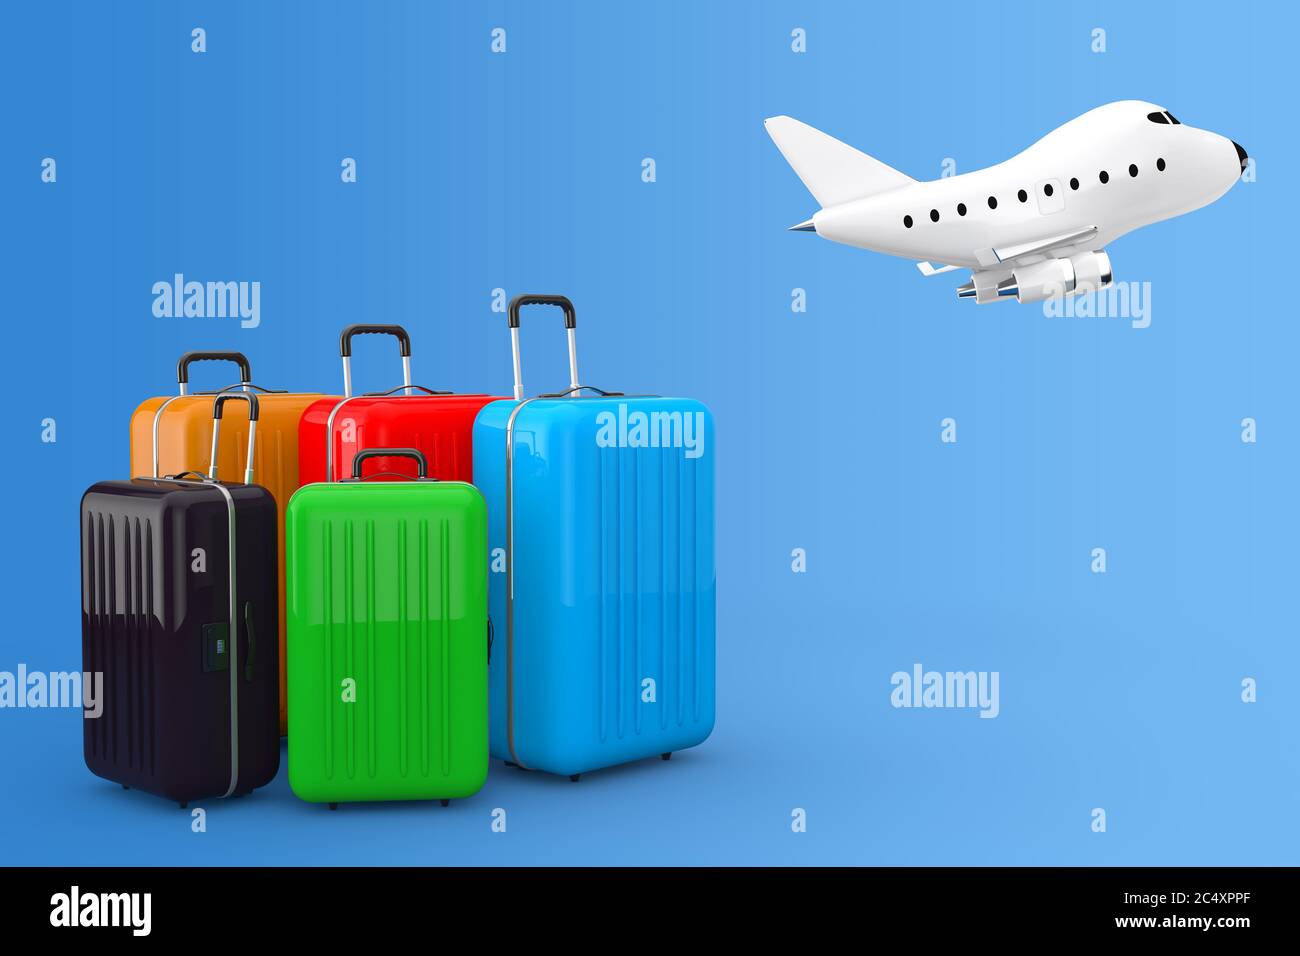 Concetto Air Travel. Valigie grandi in policarbonato multicolore con  aeroplano Cartoon Toy Jet su sfondo blu. Rendering 3d Foto stock - Alamy